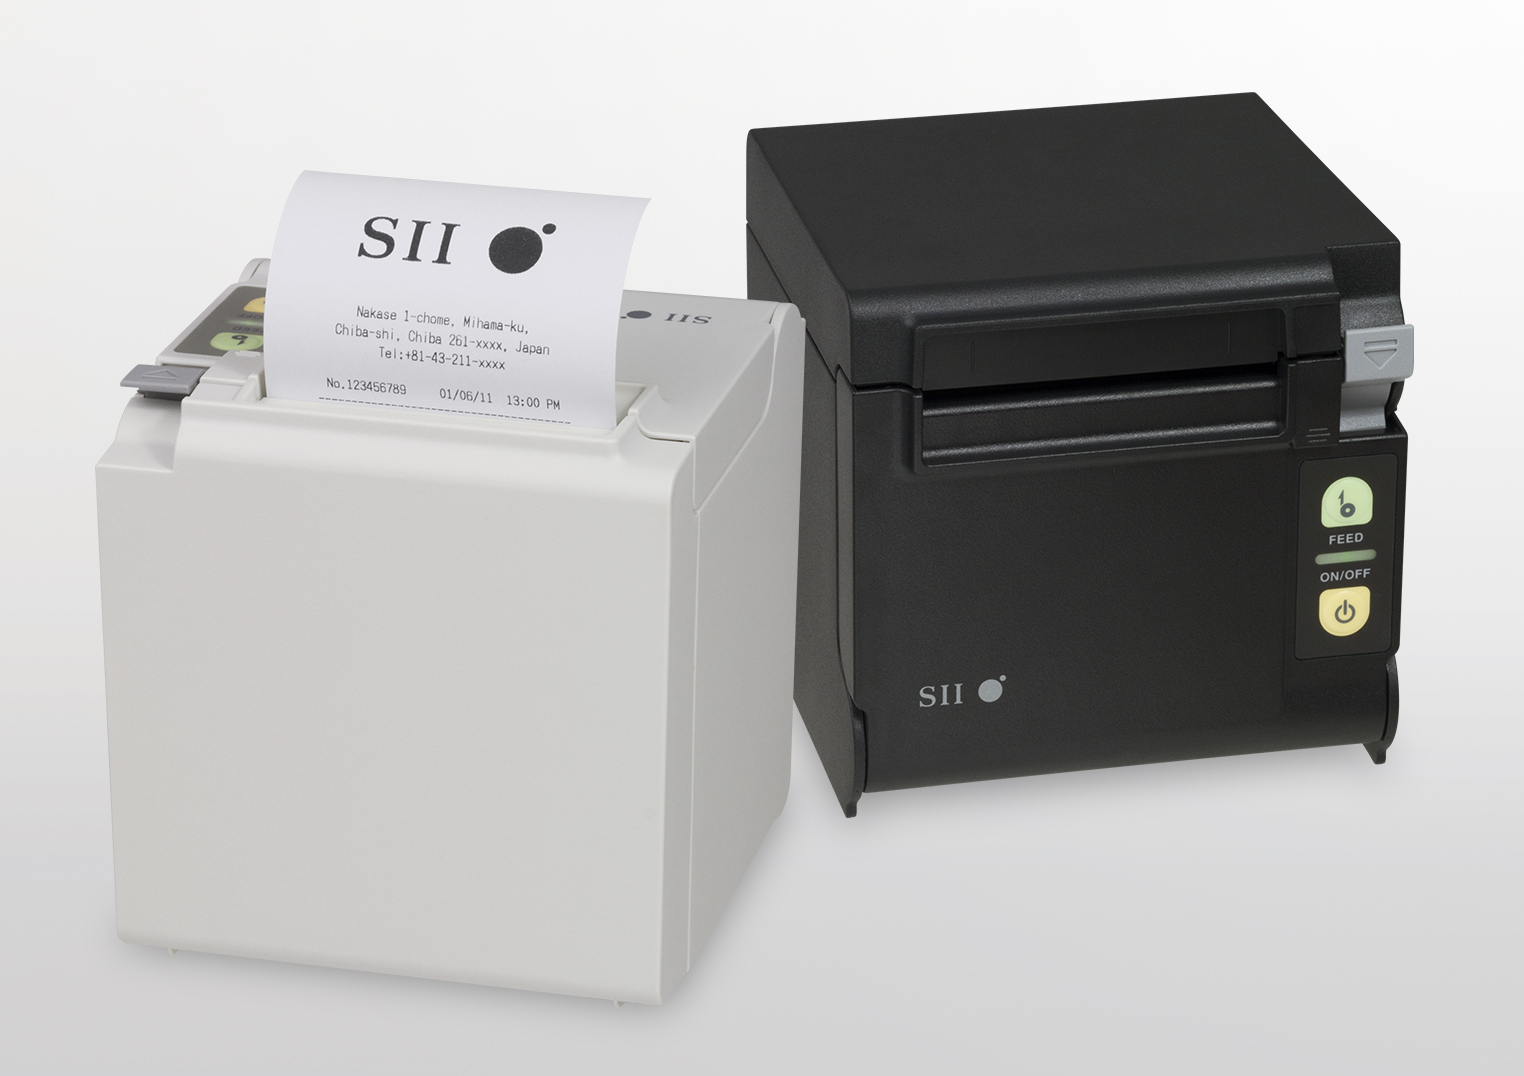 RP-D10 Series Receipt Printers - Thermal Printers | Seiko 